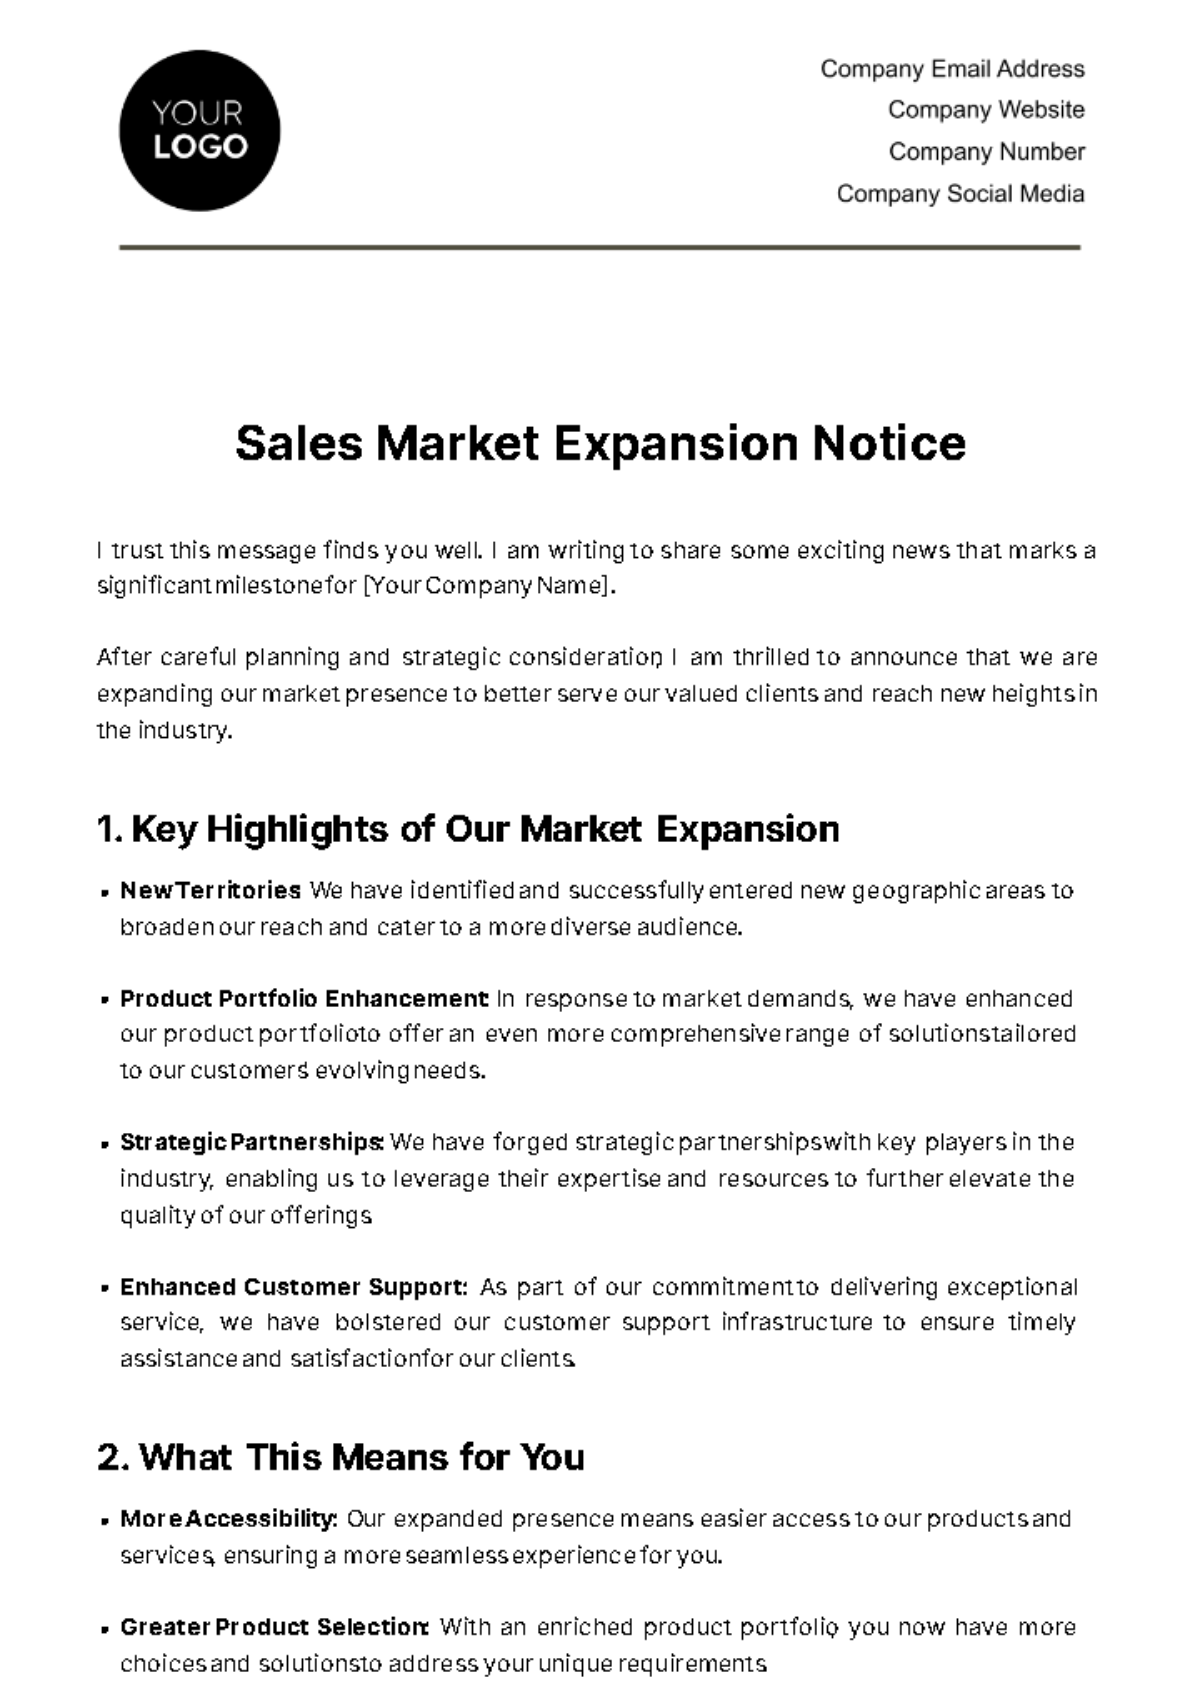 Sales Market Expansion Notice Template